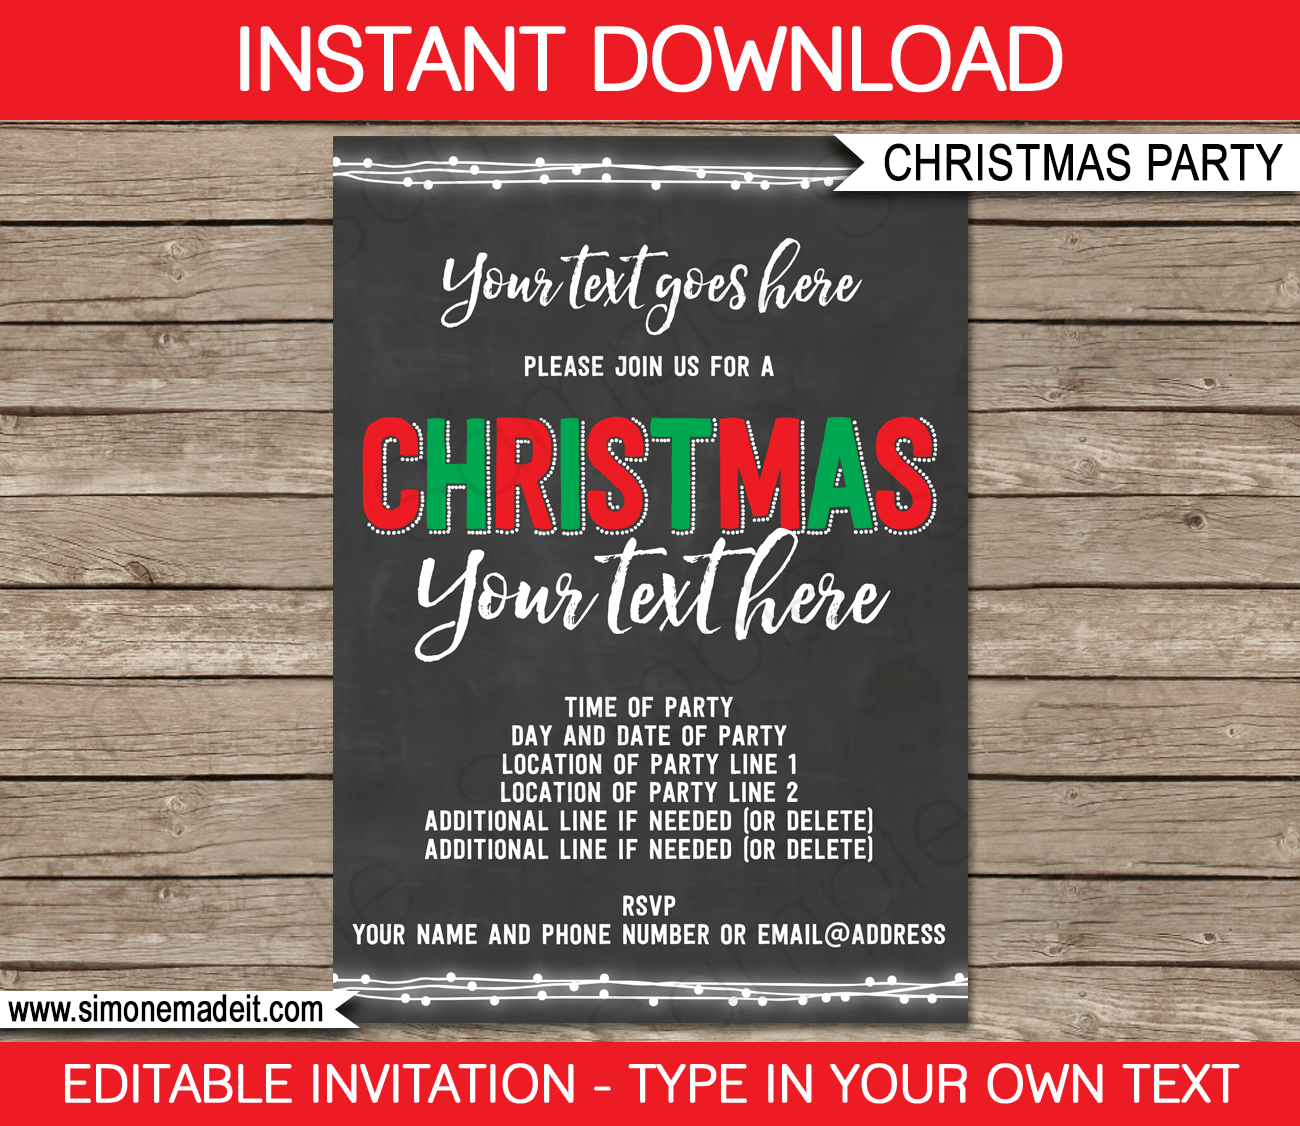 Printable Christmas Party Invitations | Chalkboard | Editable Text | Instant Download via simonemadeit.com